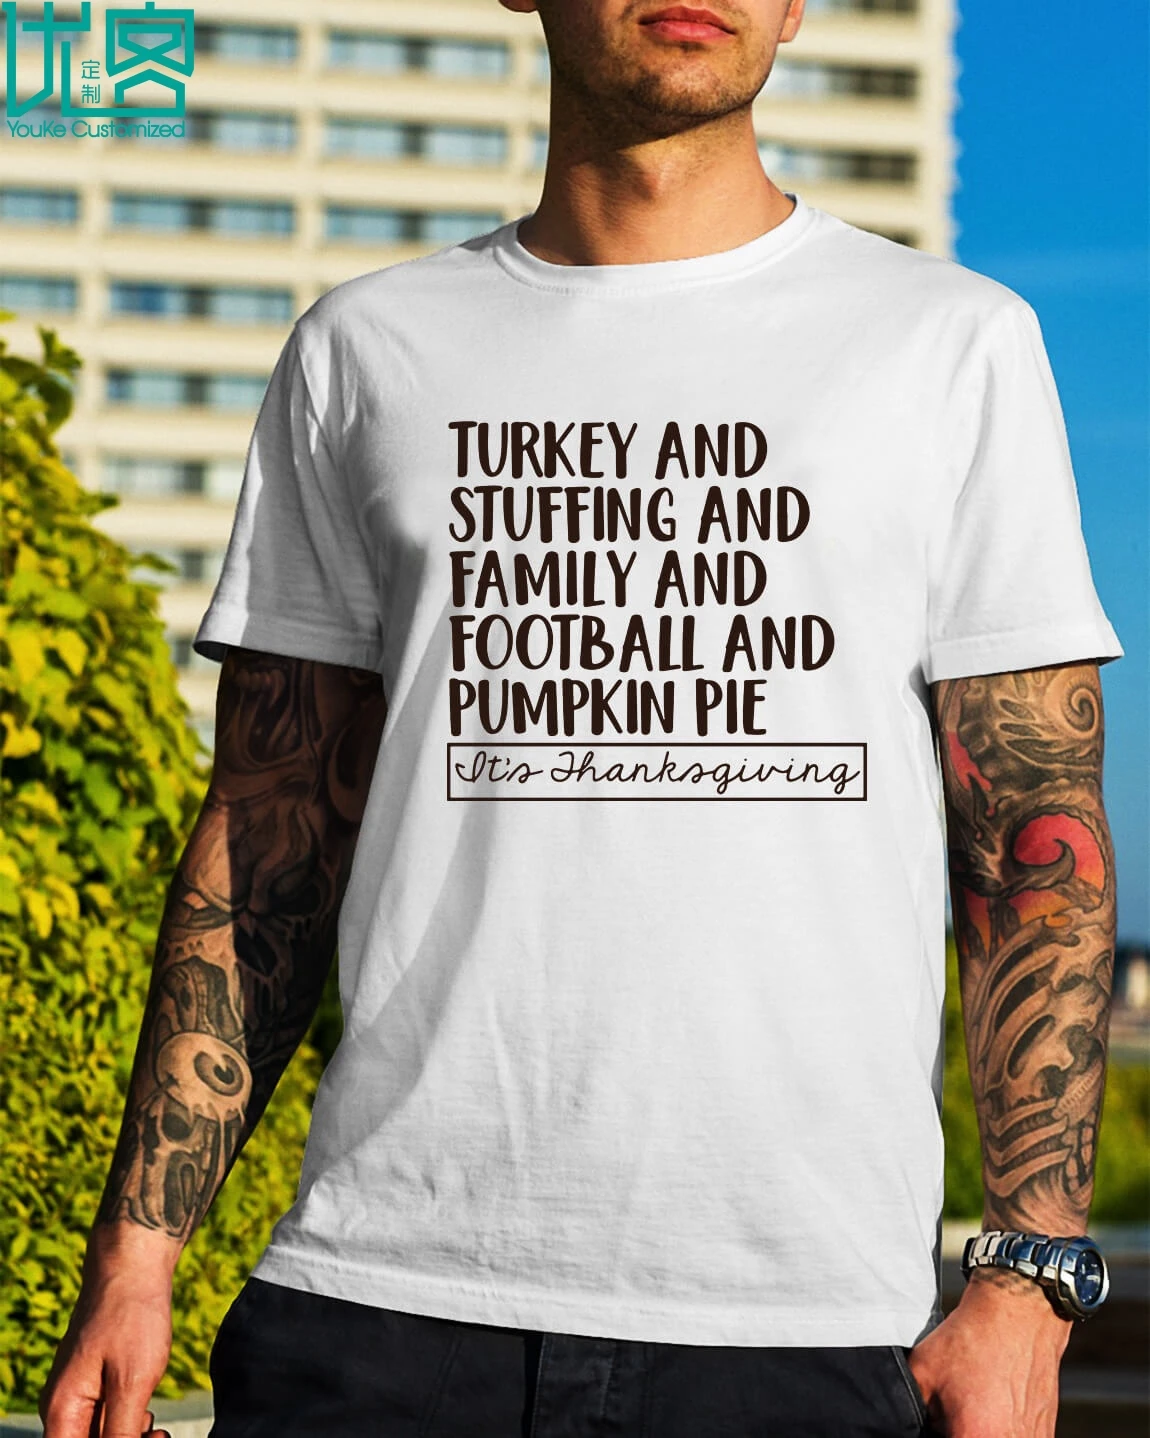 Gildan бренд Турция и набивка, семья и футбол и Тыква футболка с пирогом 2019 Летняя мужская футболка с коротким рукавом